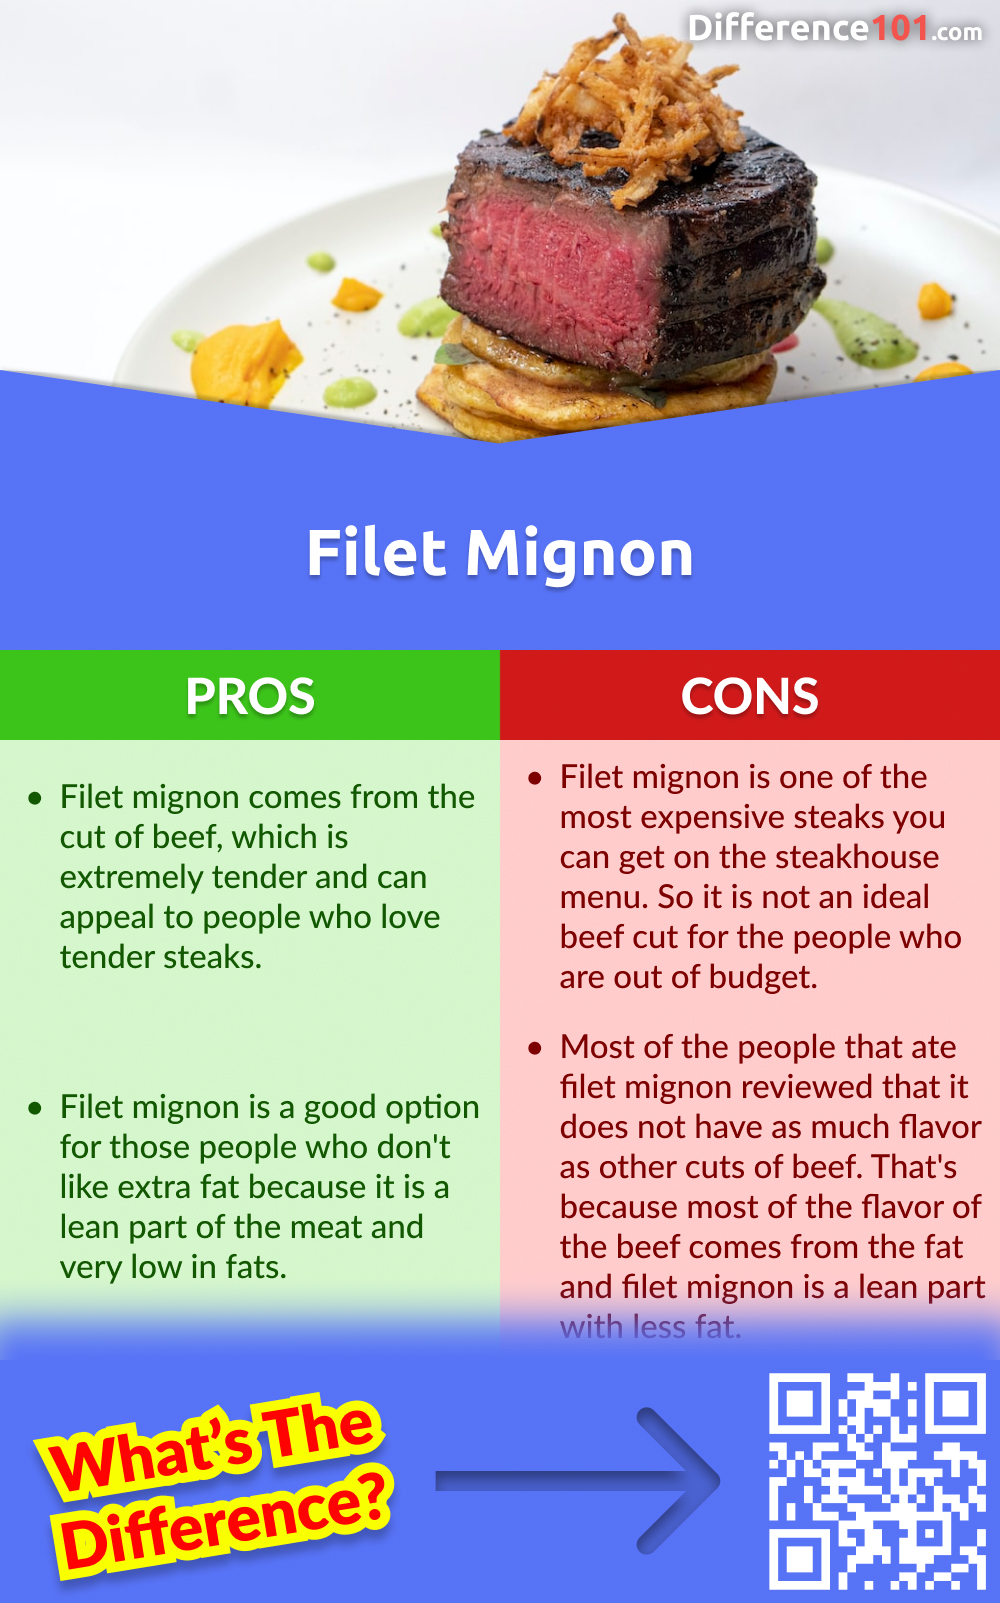 Filet Mignon Pros and Cons